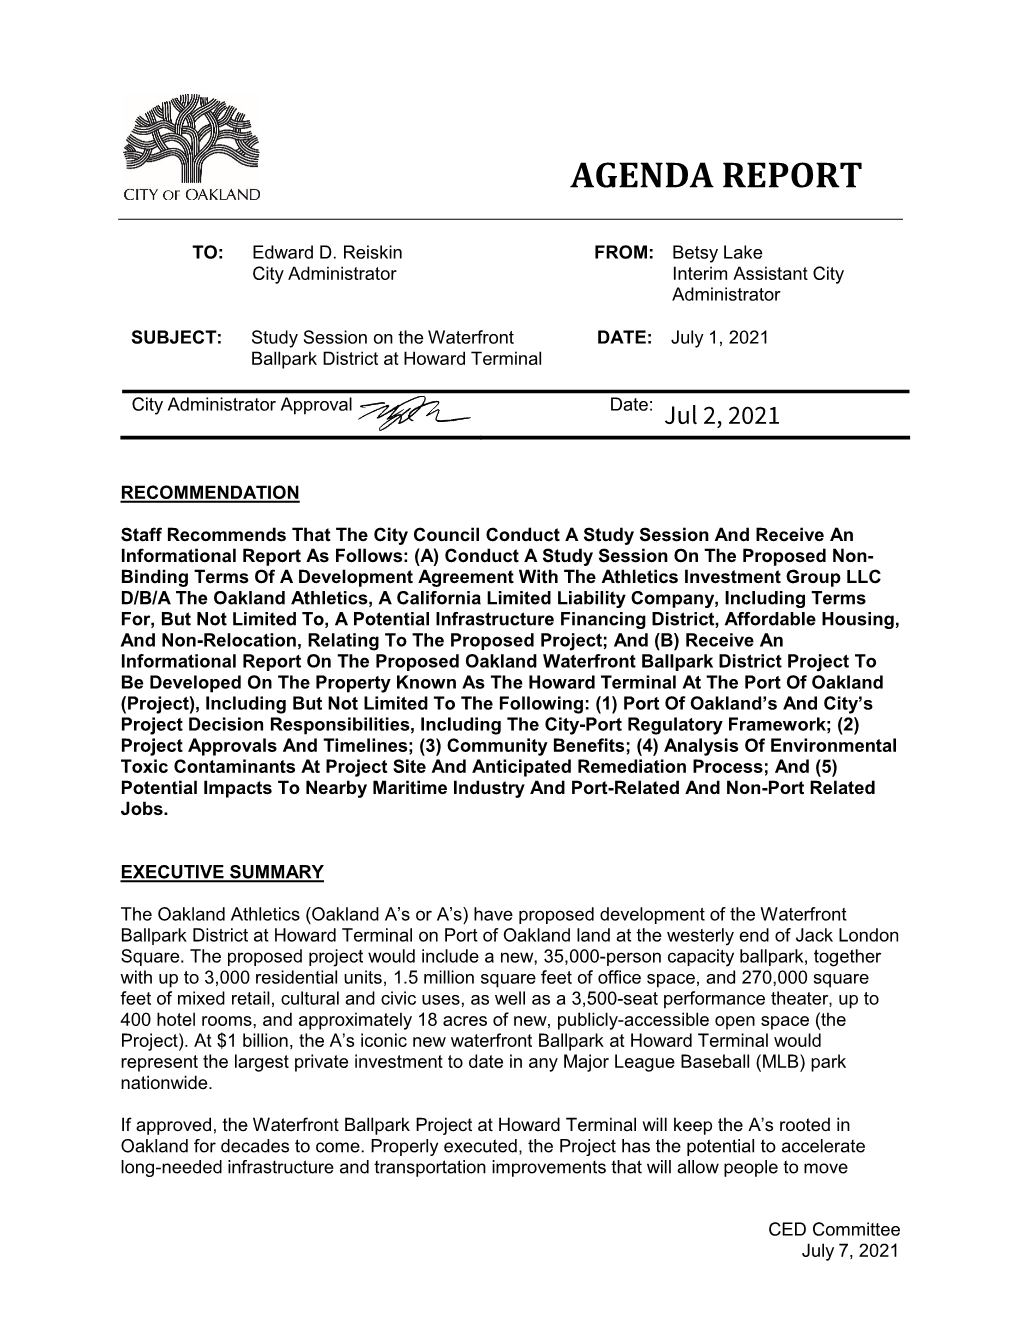 City Council Agenda Reports